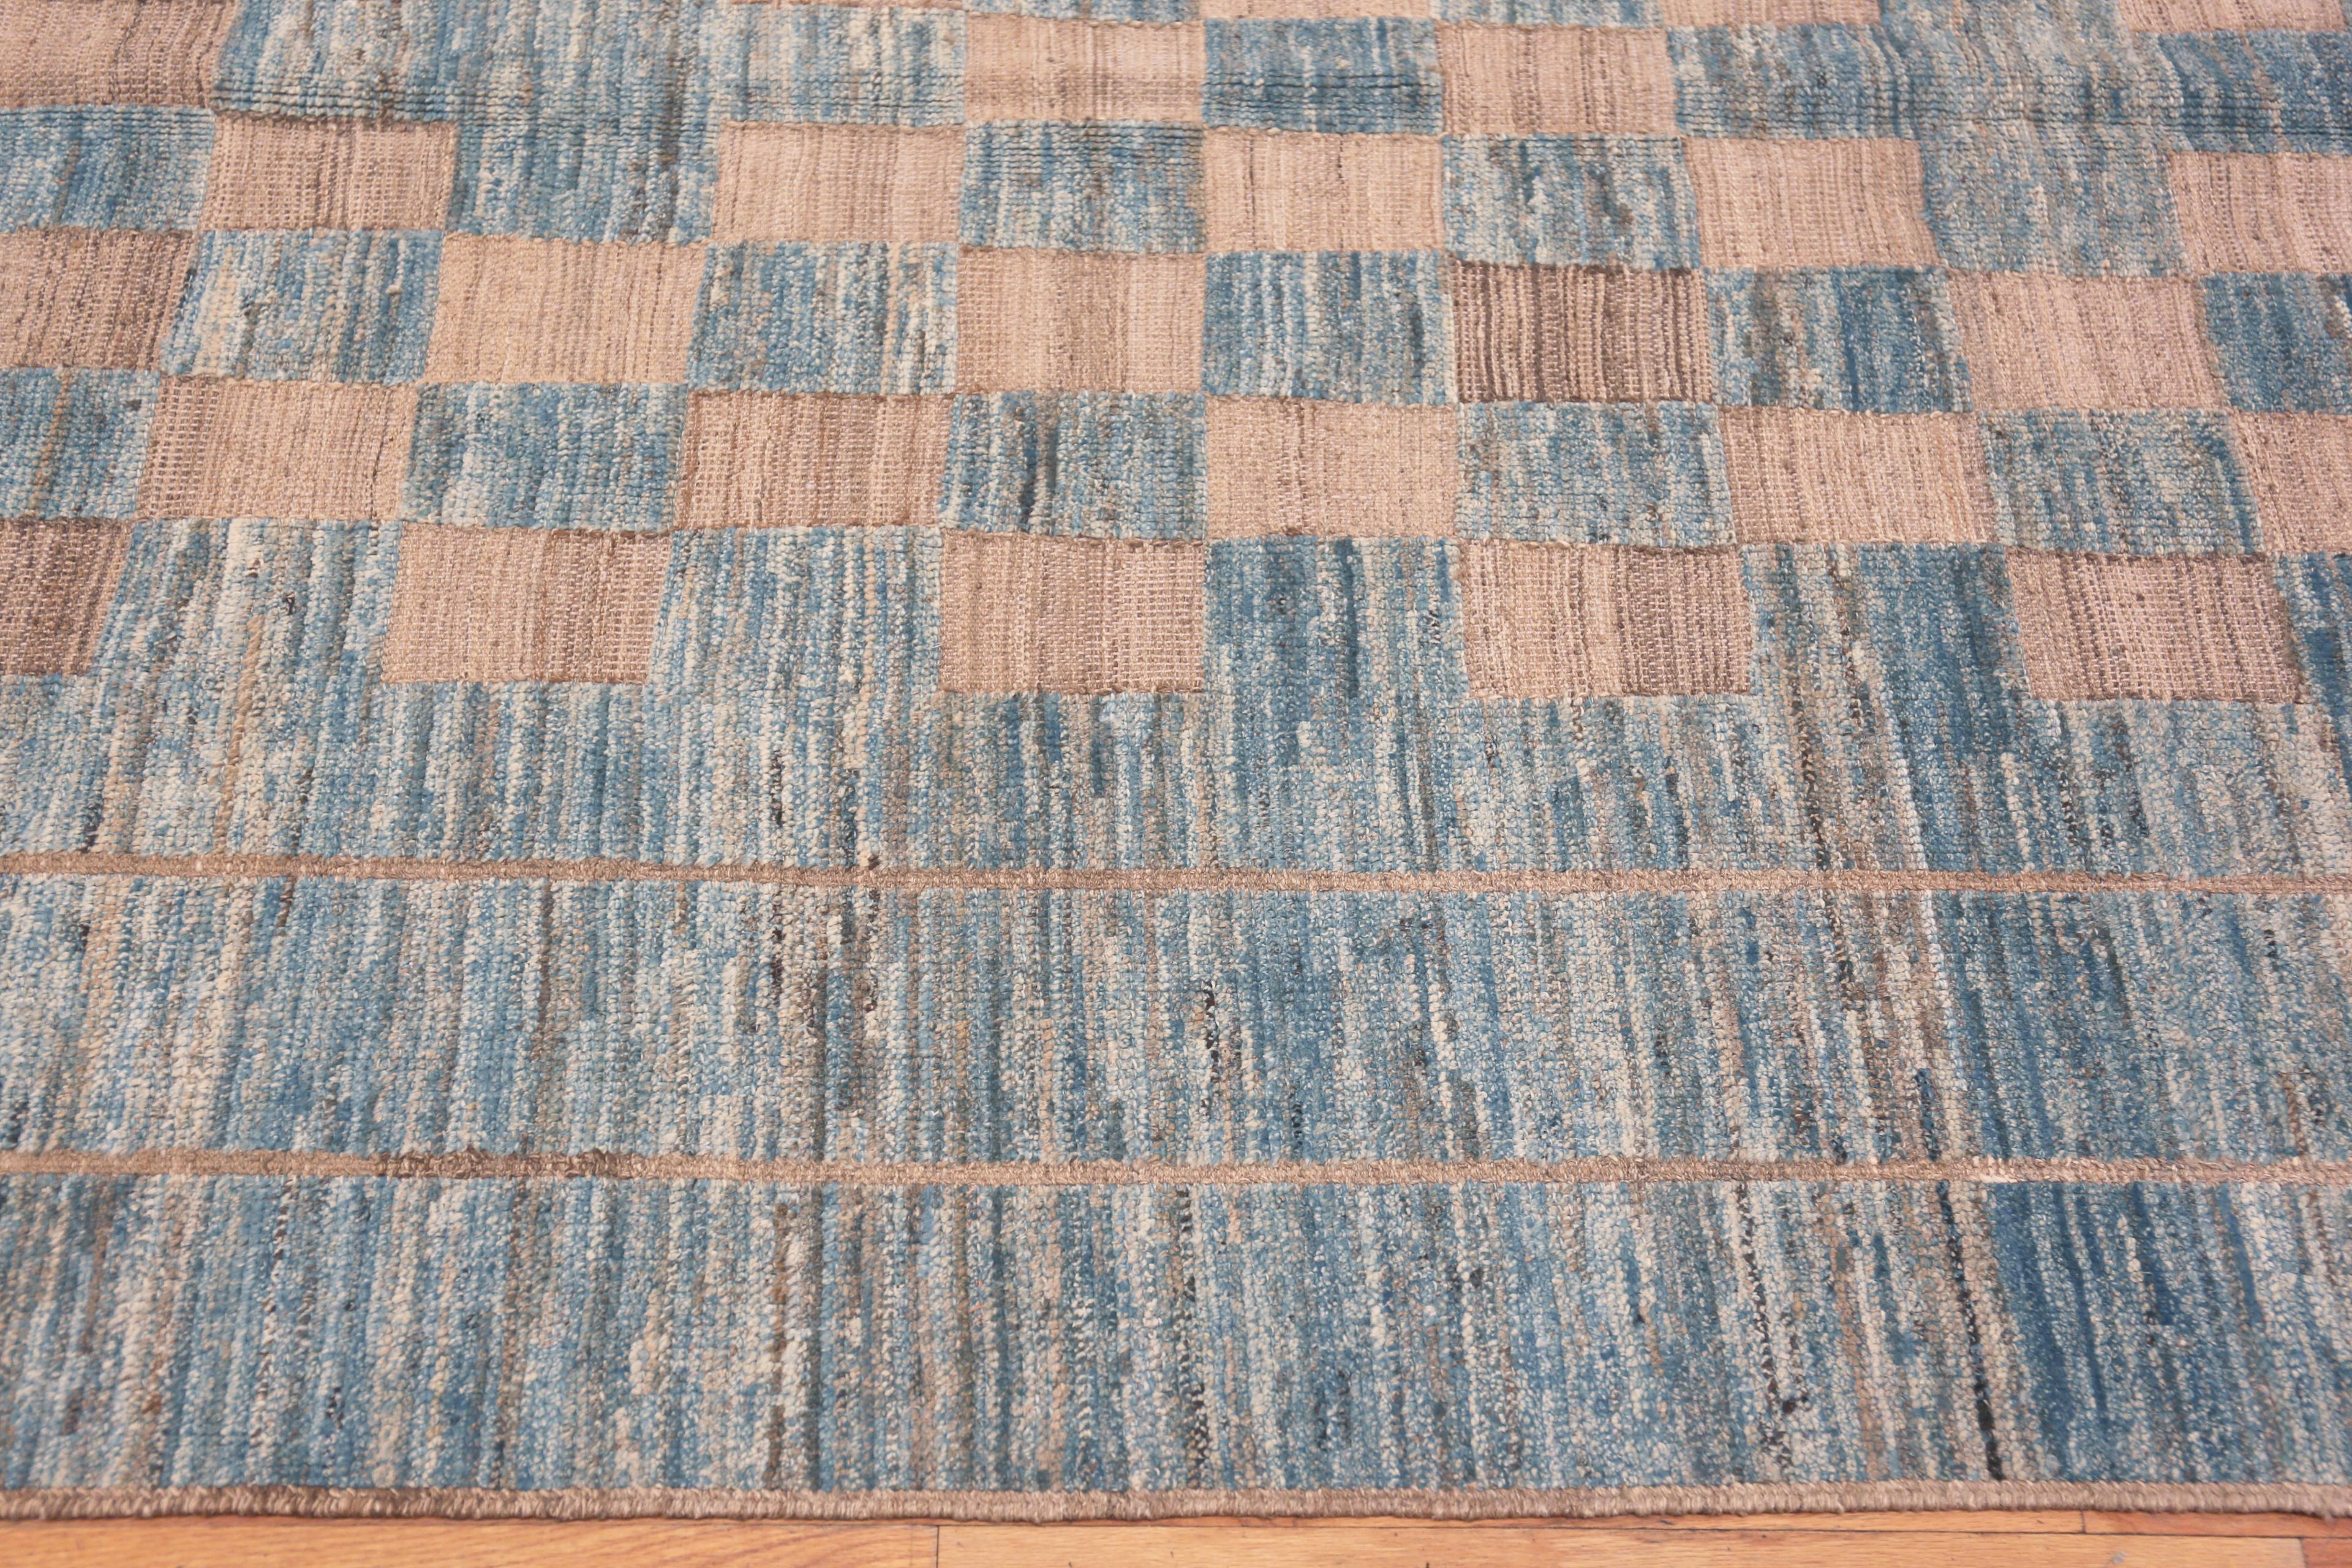 Laine Collection Nazmiyal, tapis tribal géométrique moderne, taille de pièce 8'4